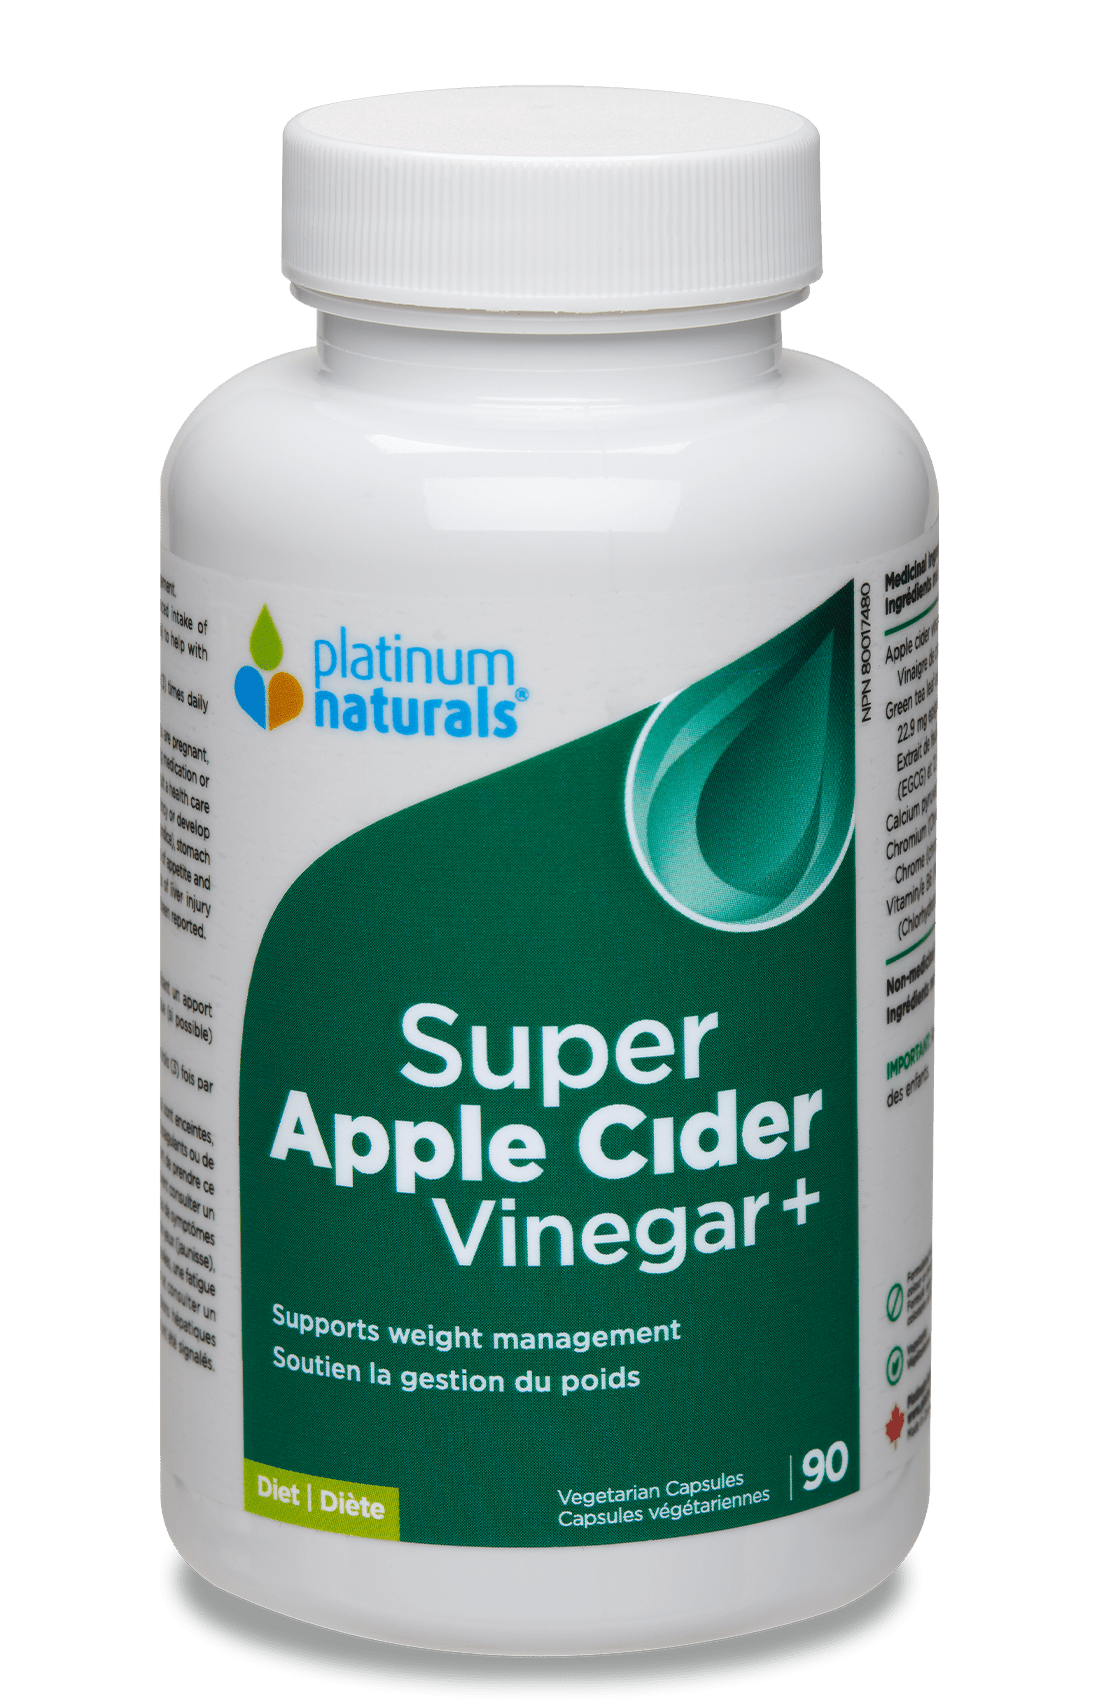 Super Apple Cider Vinegar+ Diet cg-dev-platinumnaturals 90 